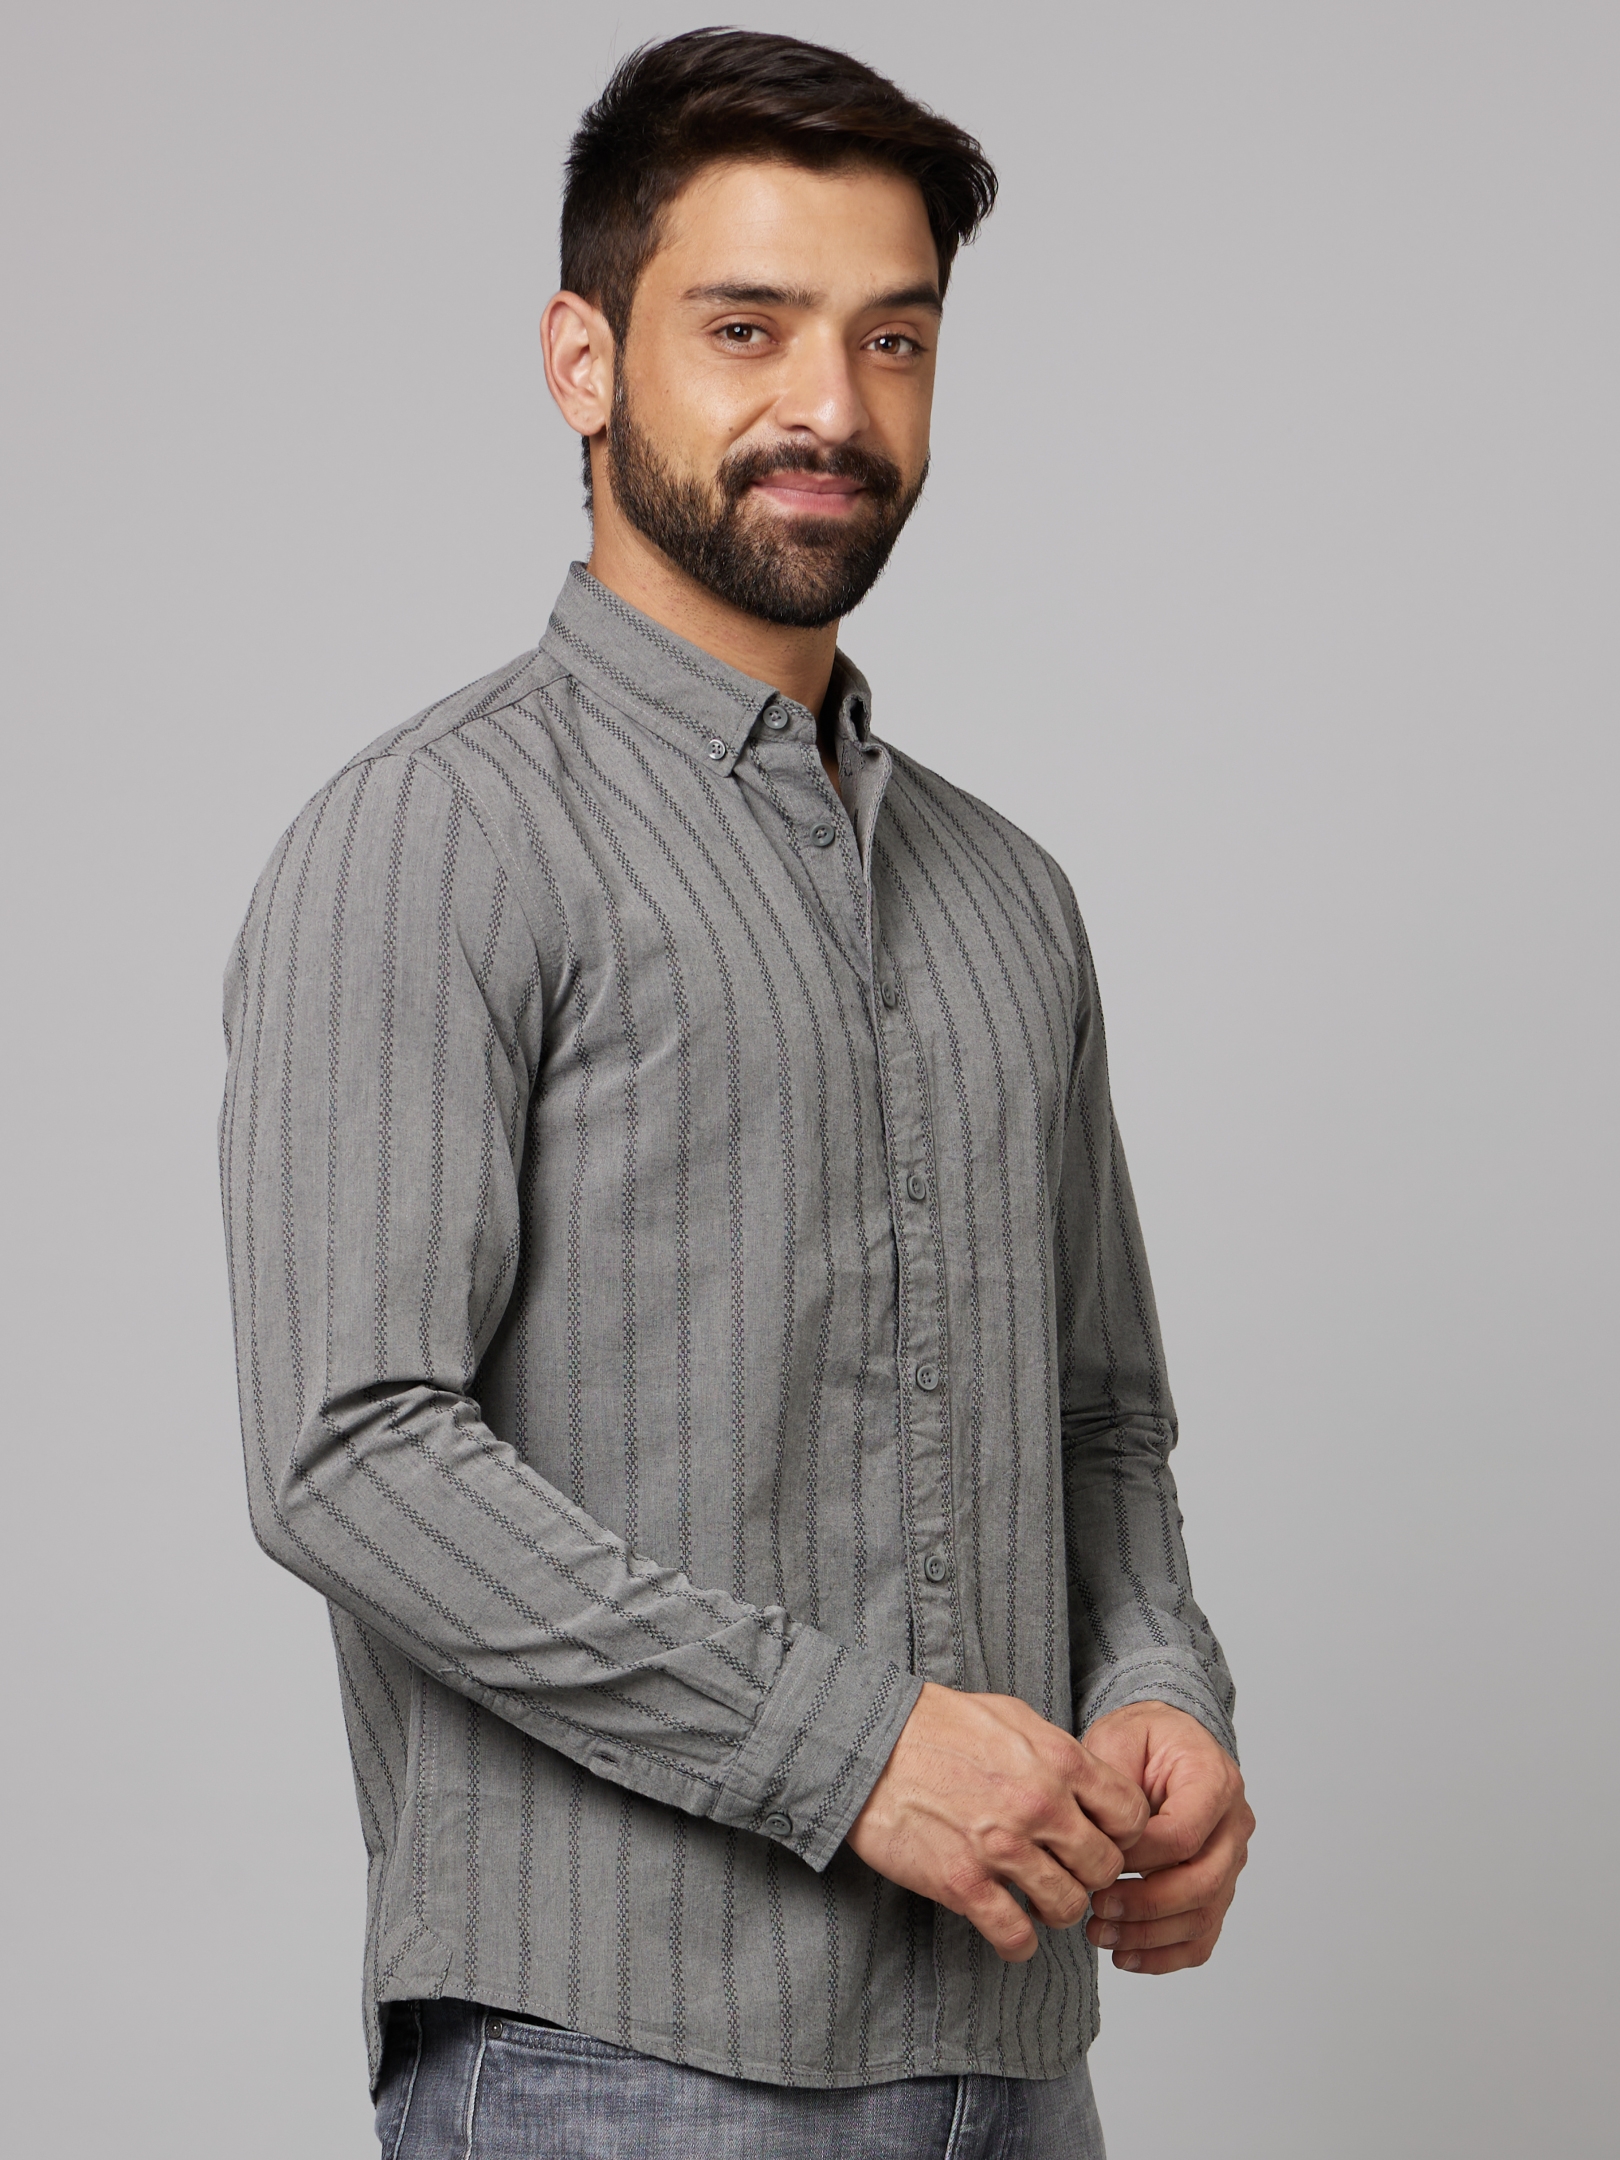 Men's Grey Striped Casual Shirts